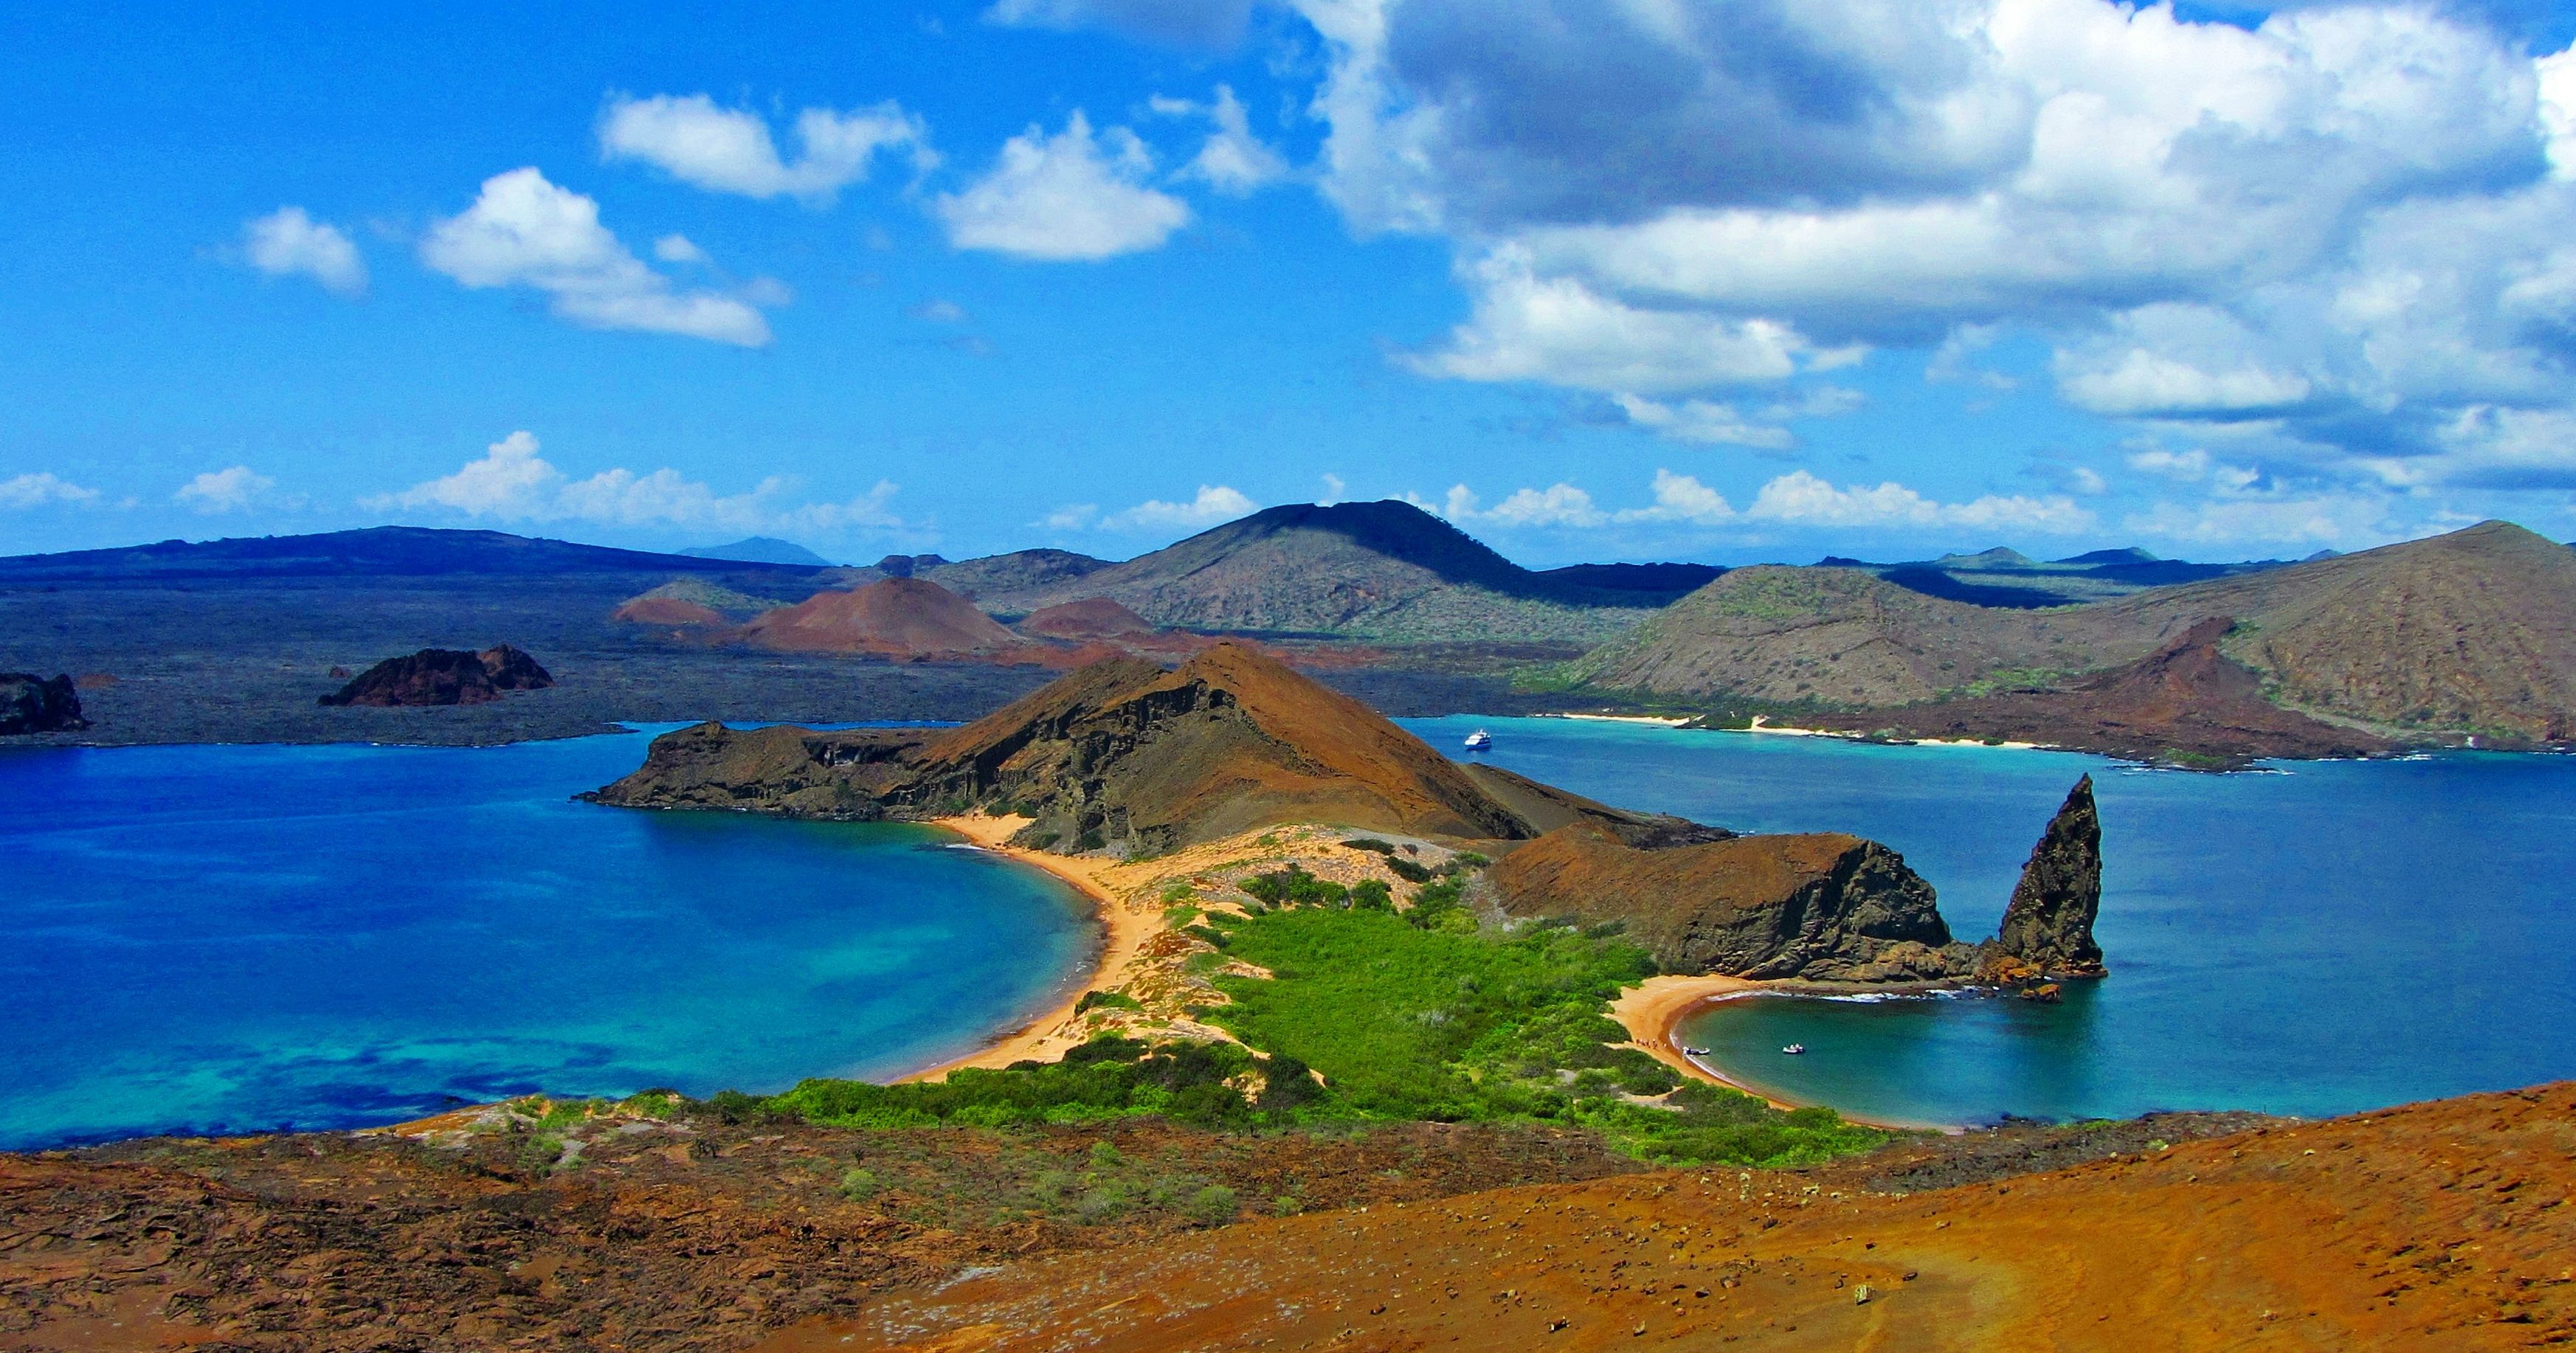 Galapagos Islands Wallpaper, HD Galapagos Islands Background RPR